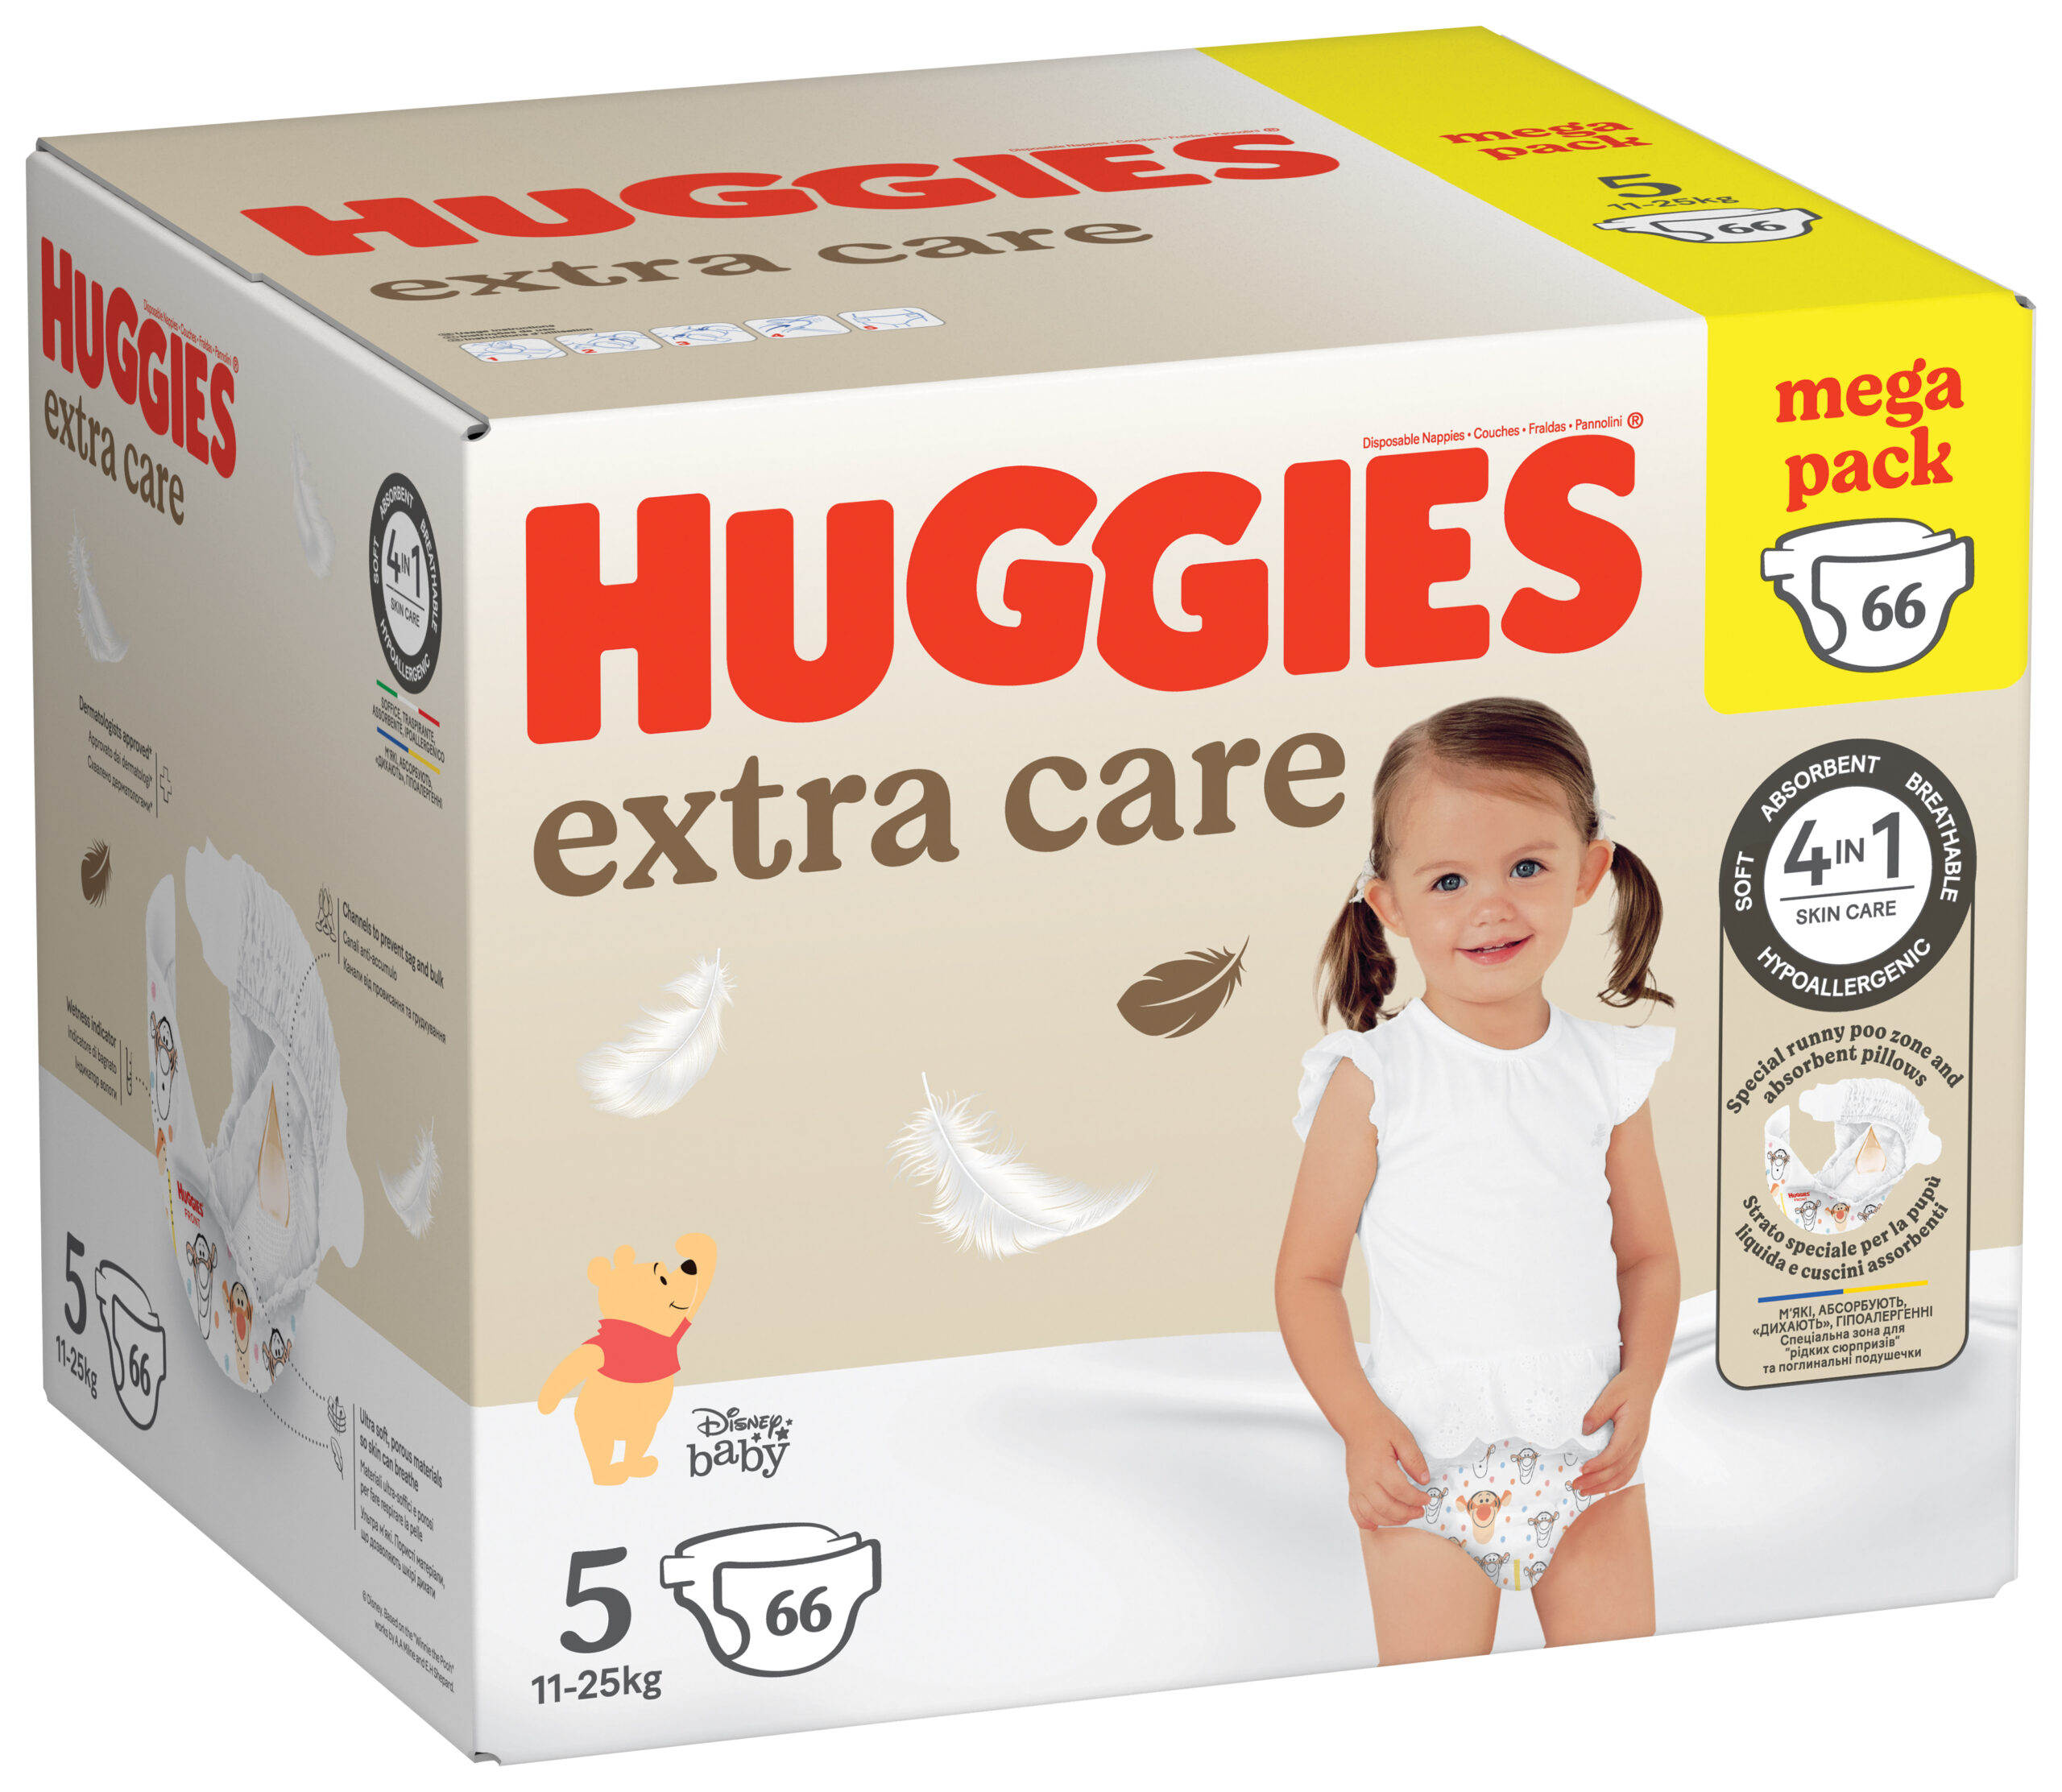 Huggies extra care mega pack tg.5 - 66 pezzi - Huggies